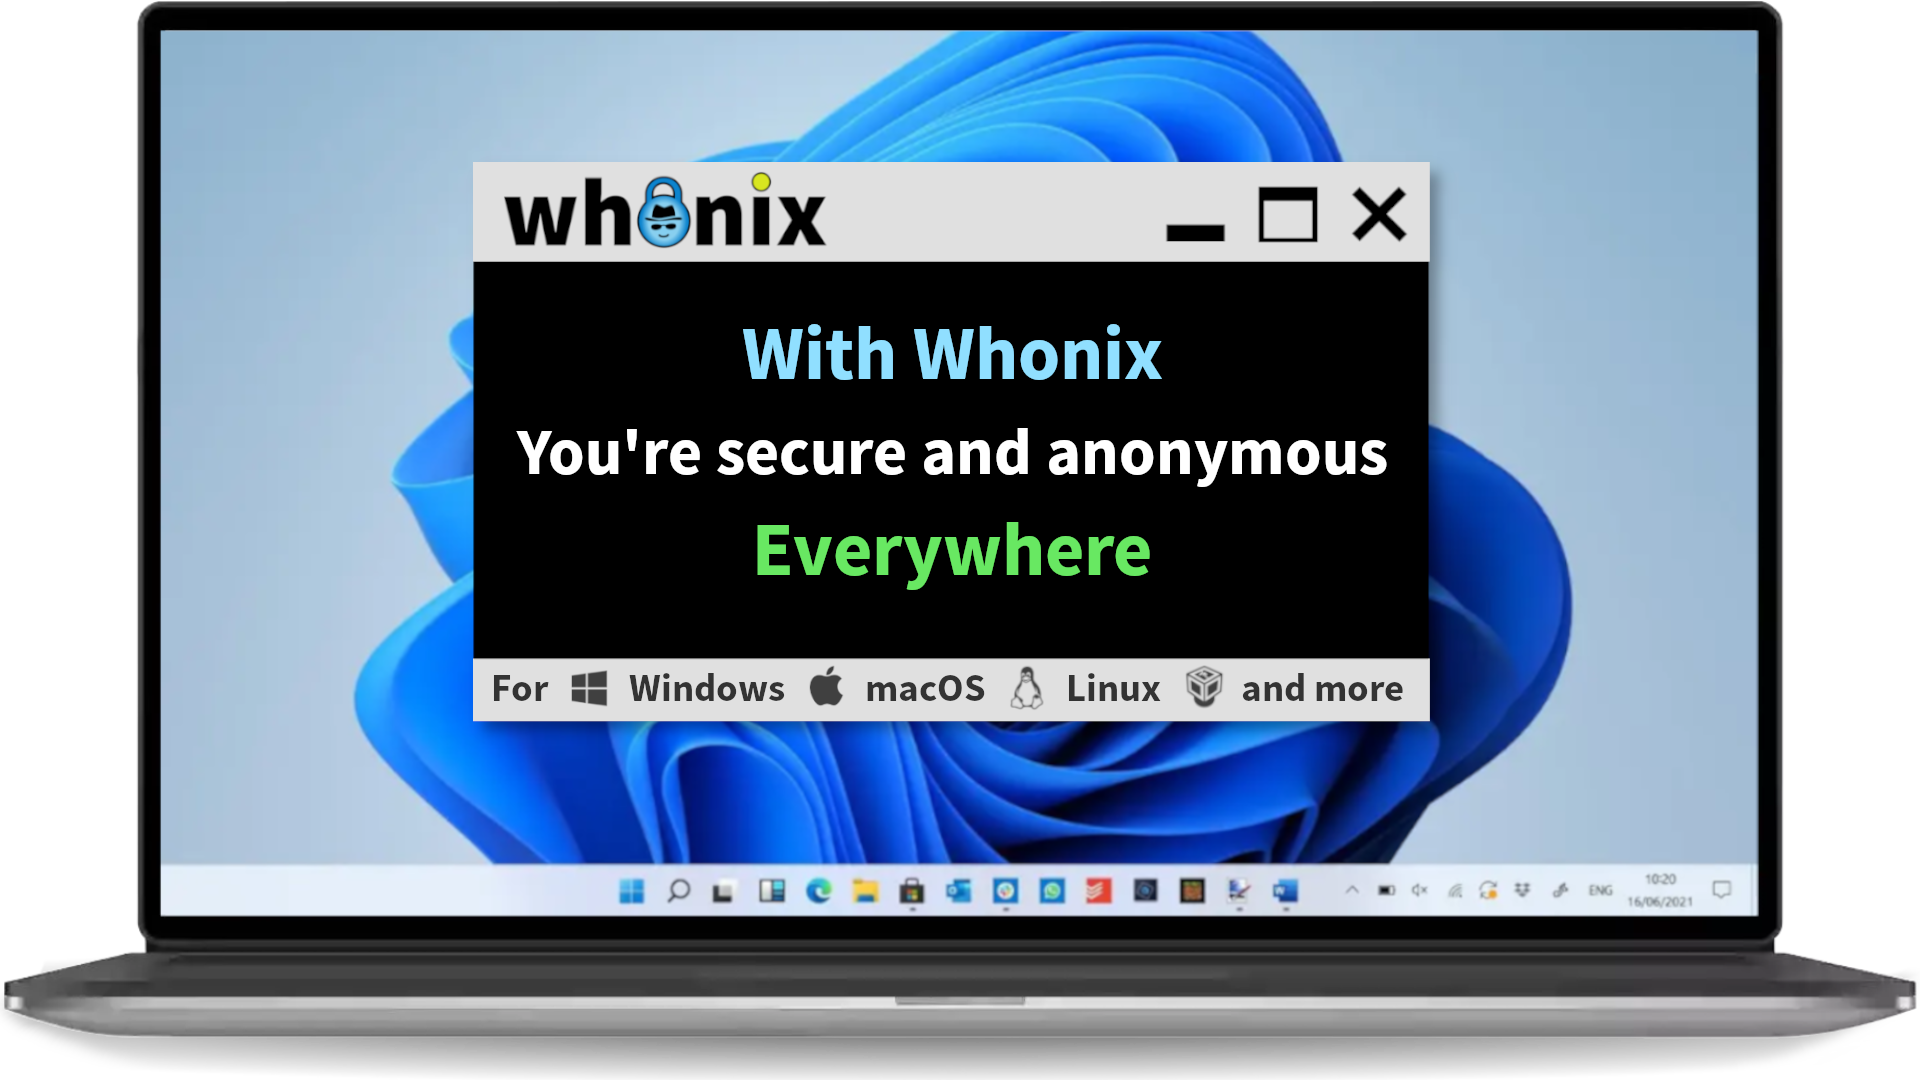 Whonix homepage image